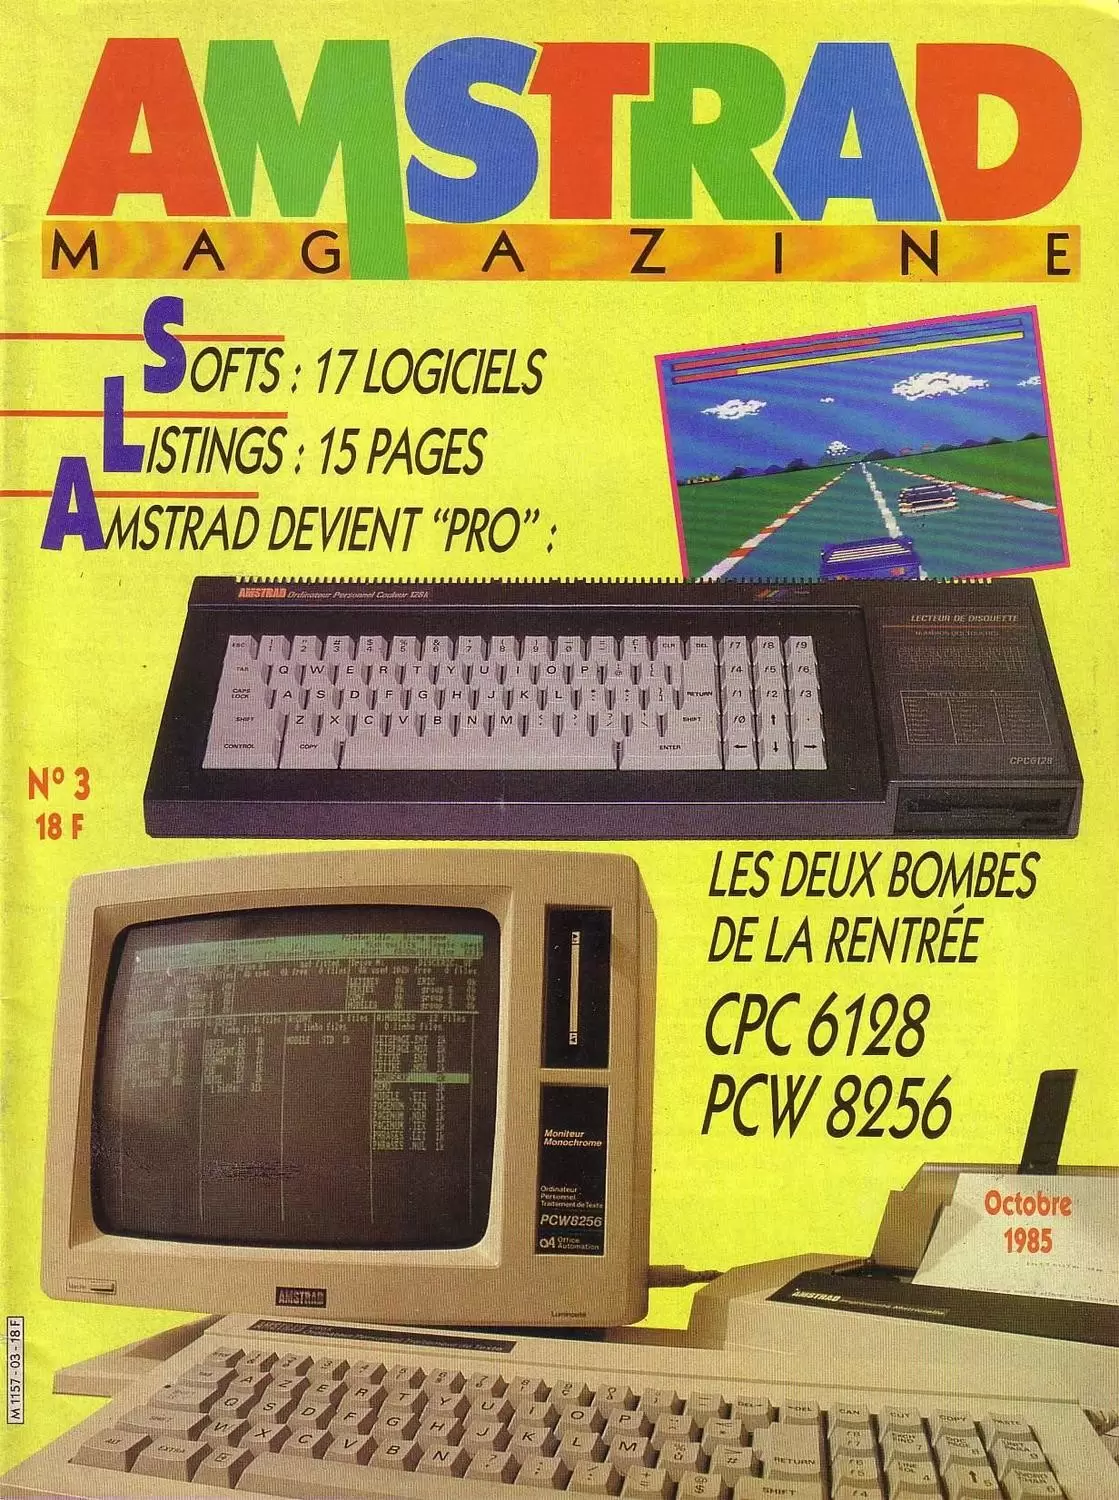 Amstrad Magazine - Amstrad Magazine n°3